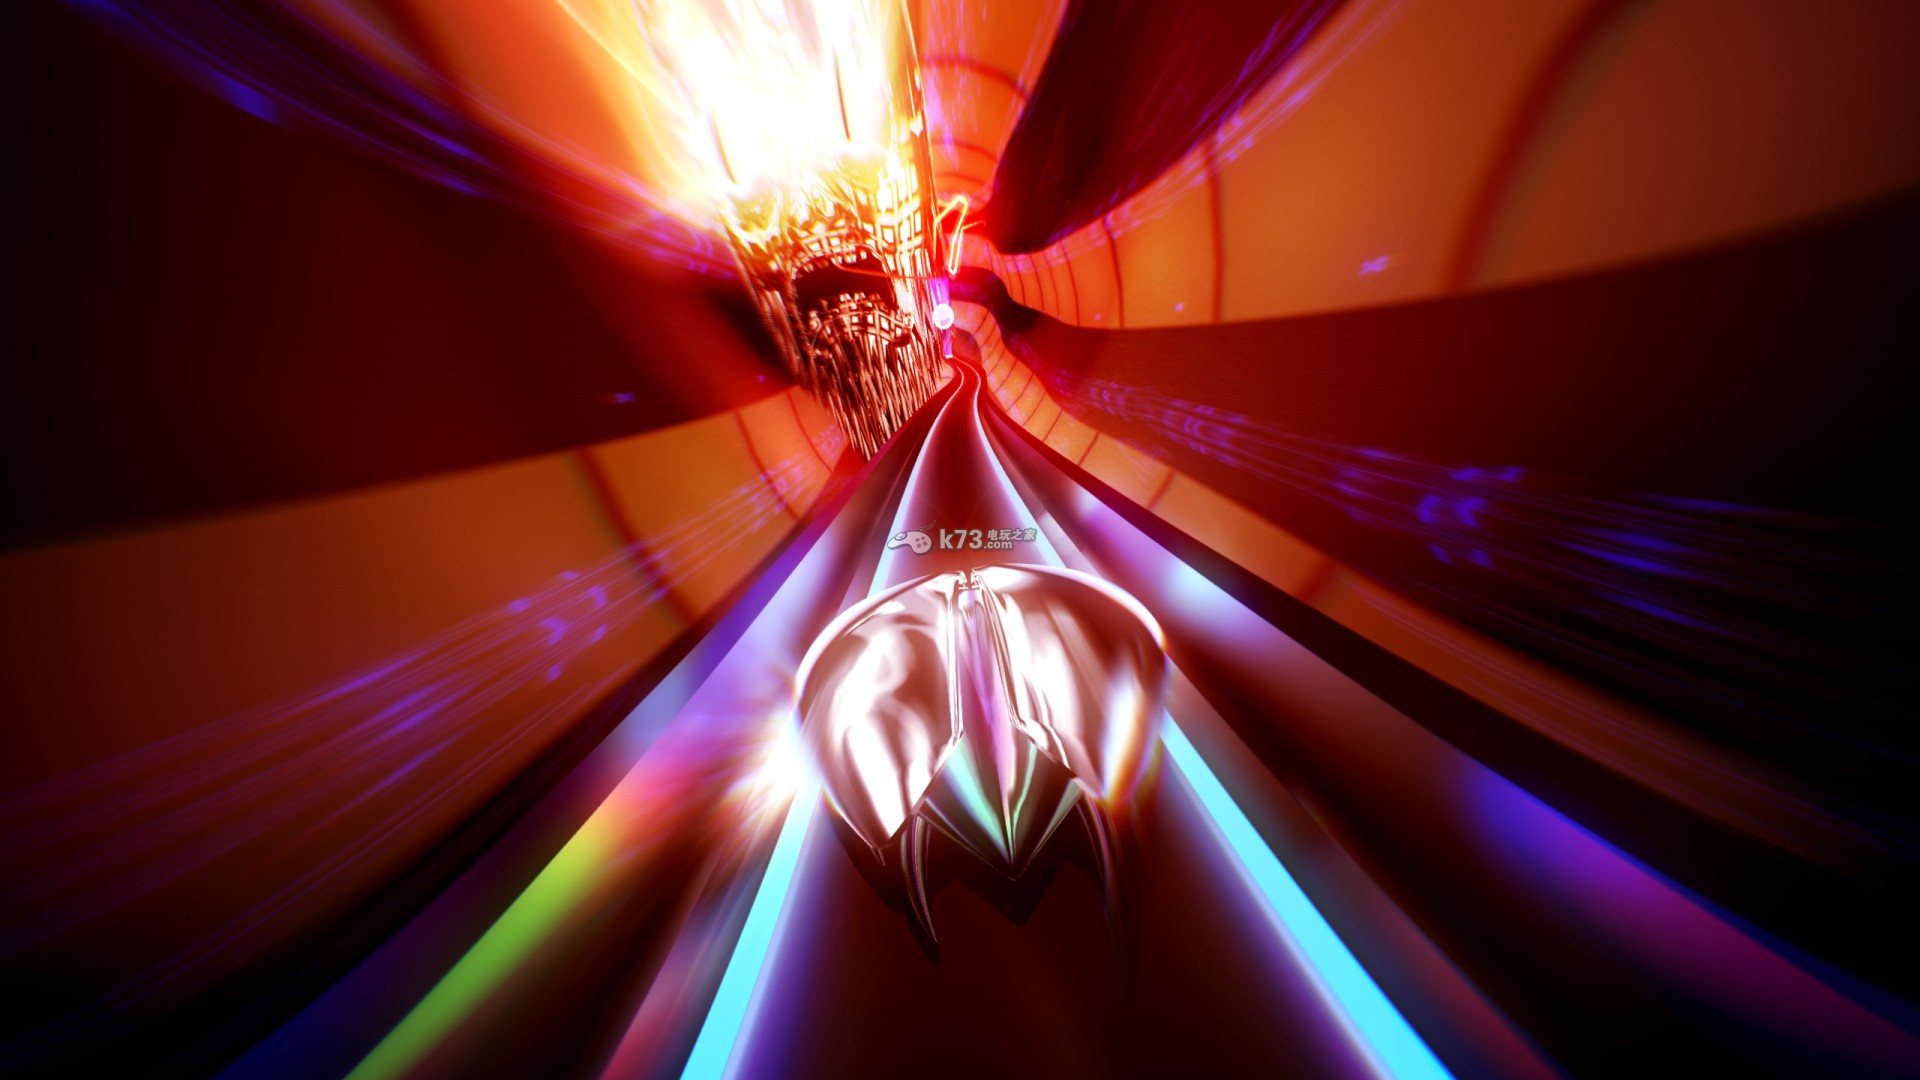 PS4节奏游戏《Thumper》发表 预告视频公开 